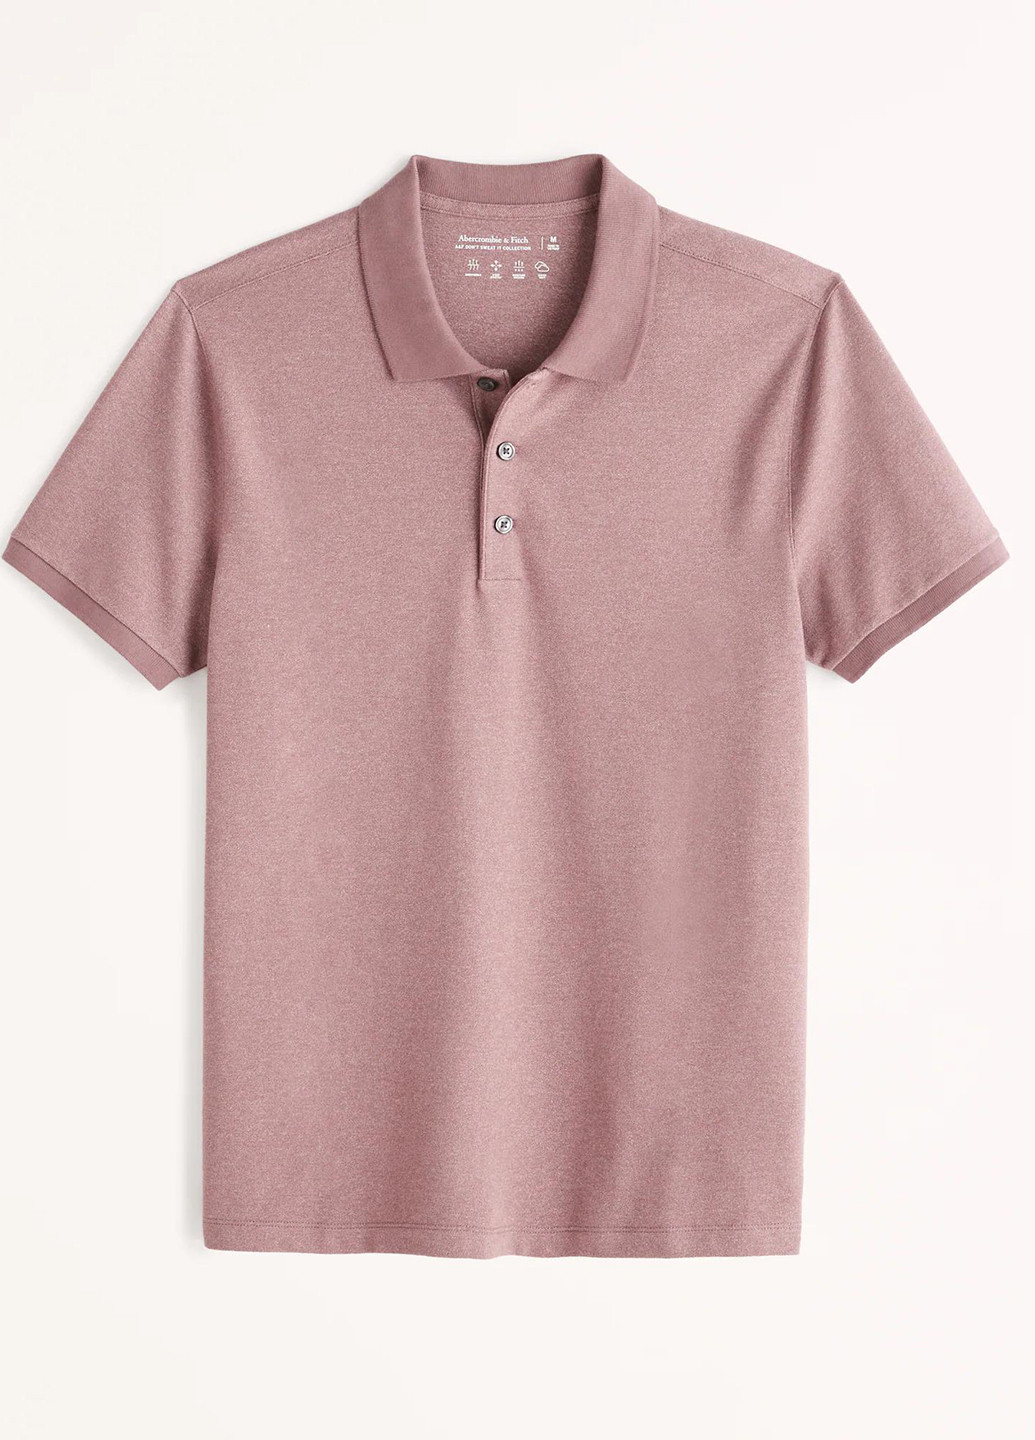 Светло-розовая футболка-поло для мужчин Abercrombie & Fitch меланжевая